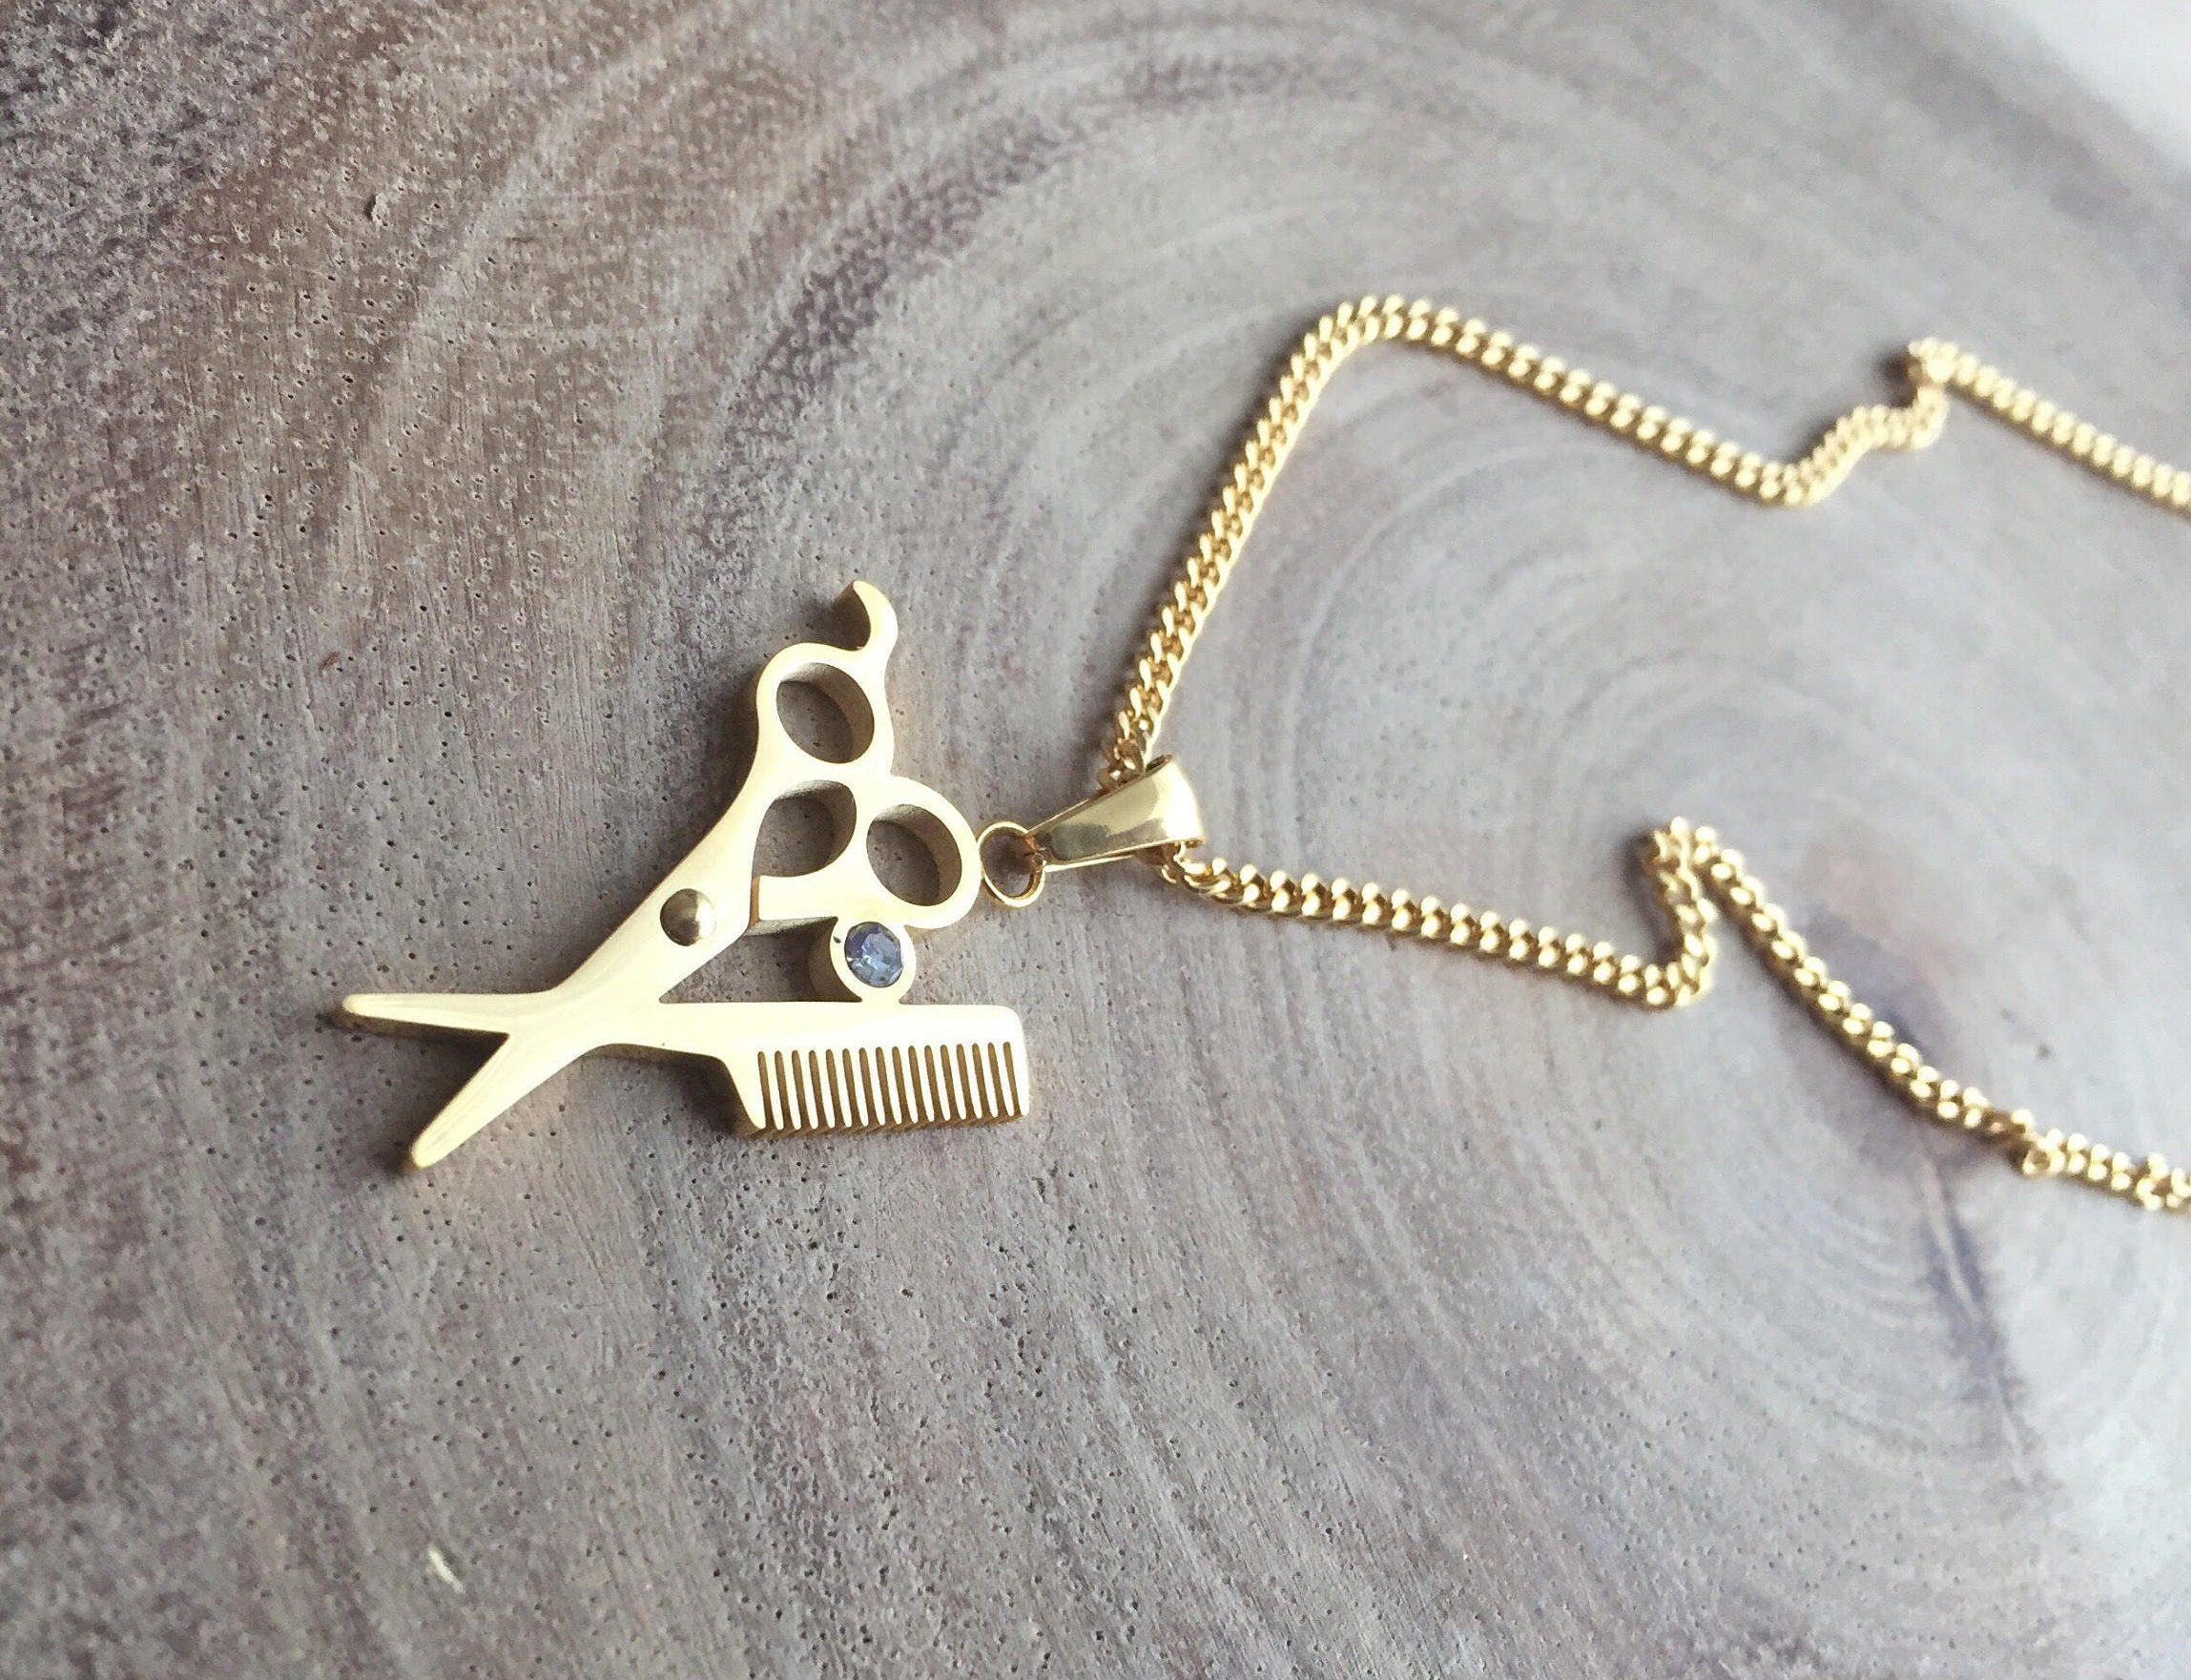 Hair Stylist Scissors and Comb Charm Keychain – JewelryEveryday